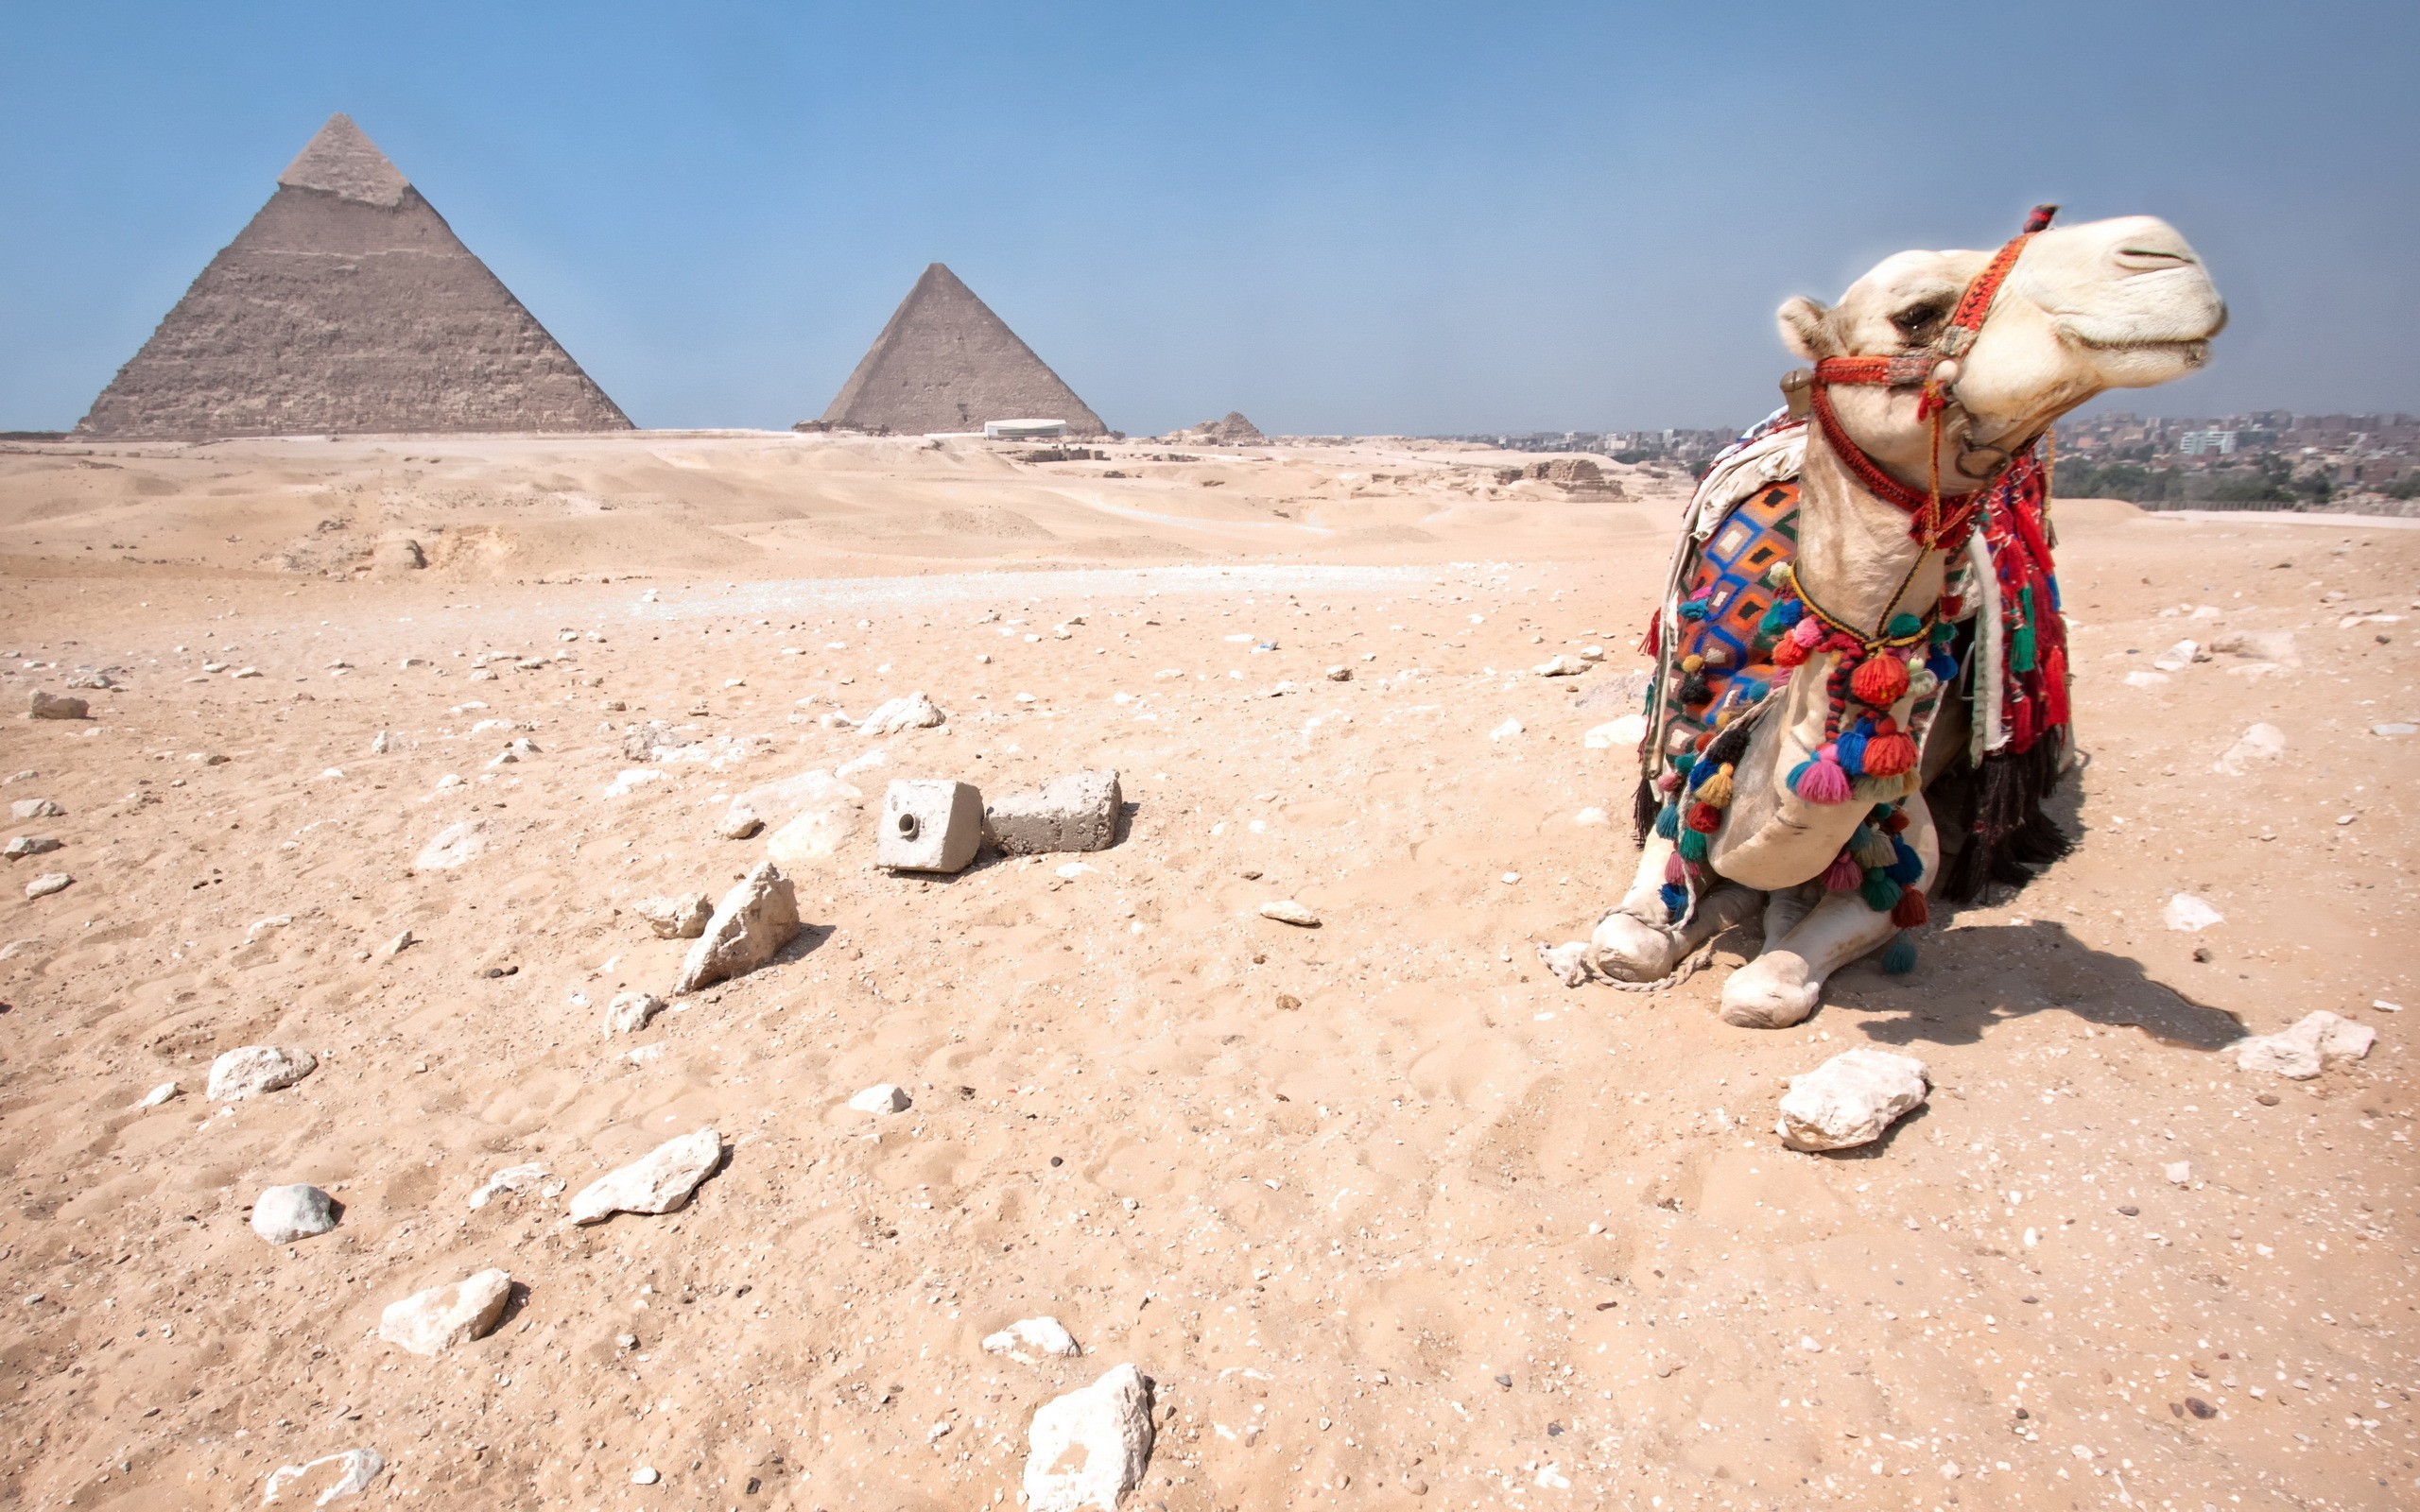 General 2560x1600 pyramid camels desert animals Egypt mammals landmark World Heritage Site Africa